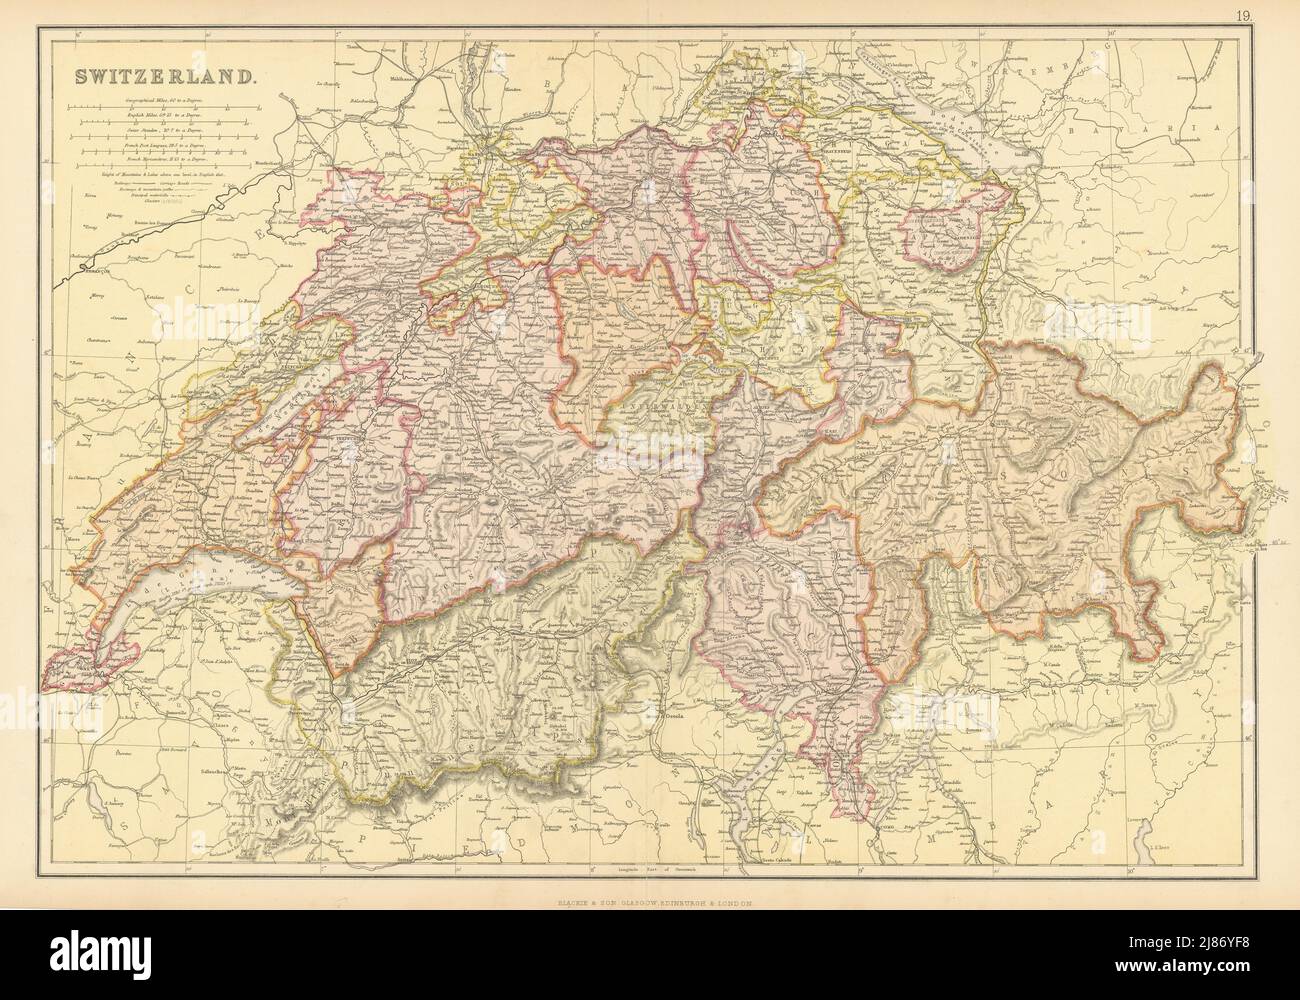 SWITZERLAND. railways mountain paths waterfalls & glaciers. BLACKIE 1886 map Stock Photo